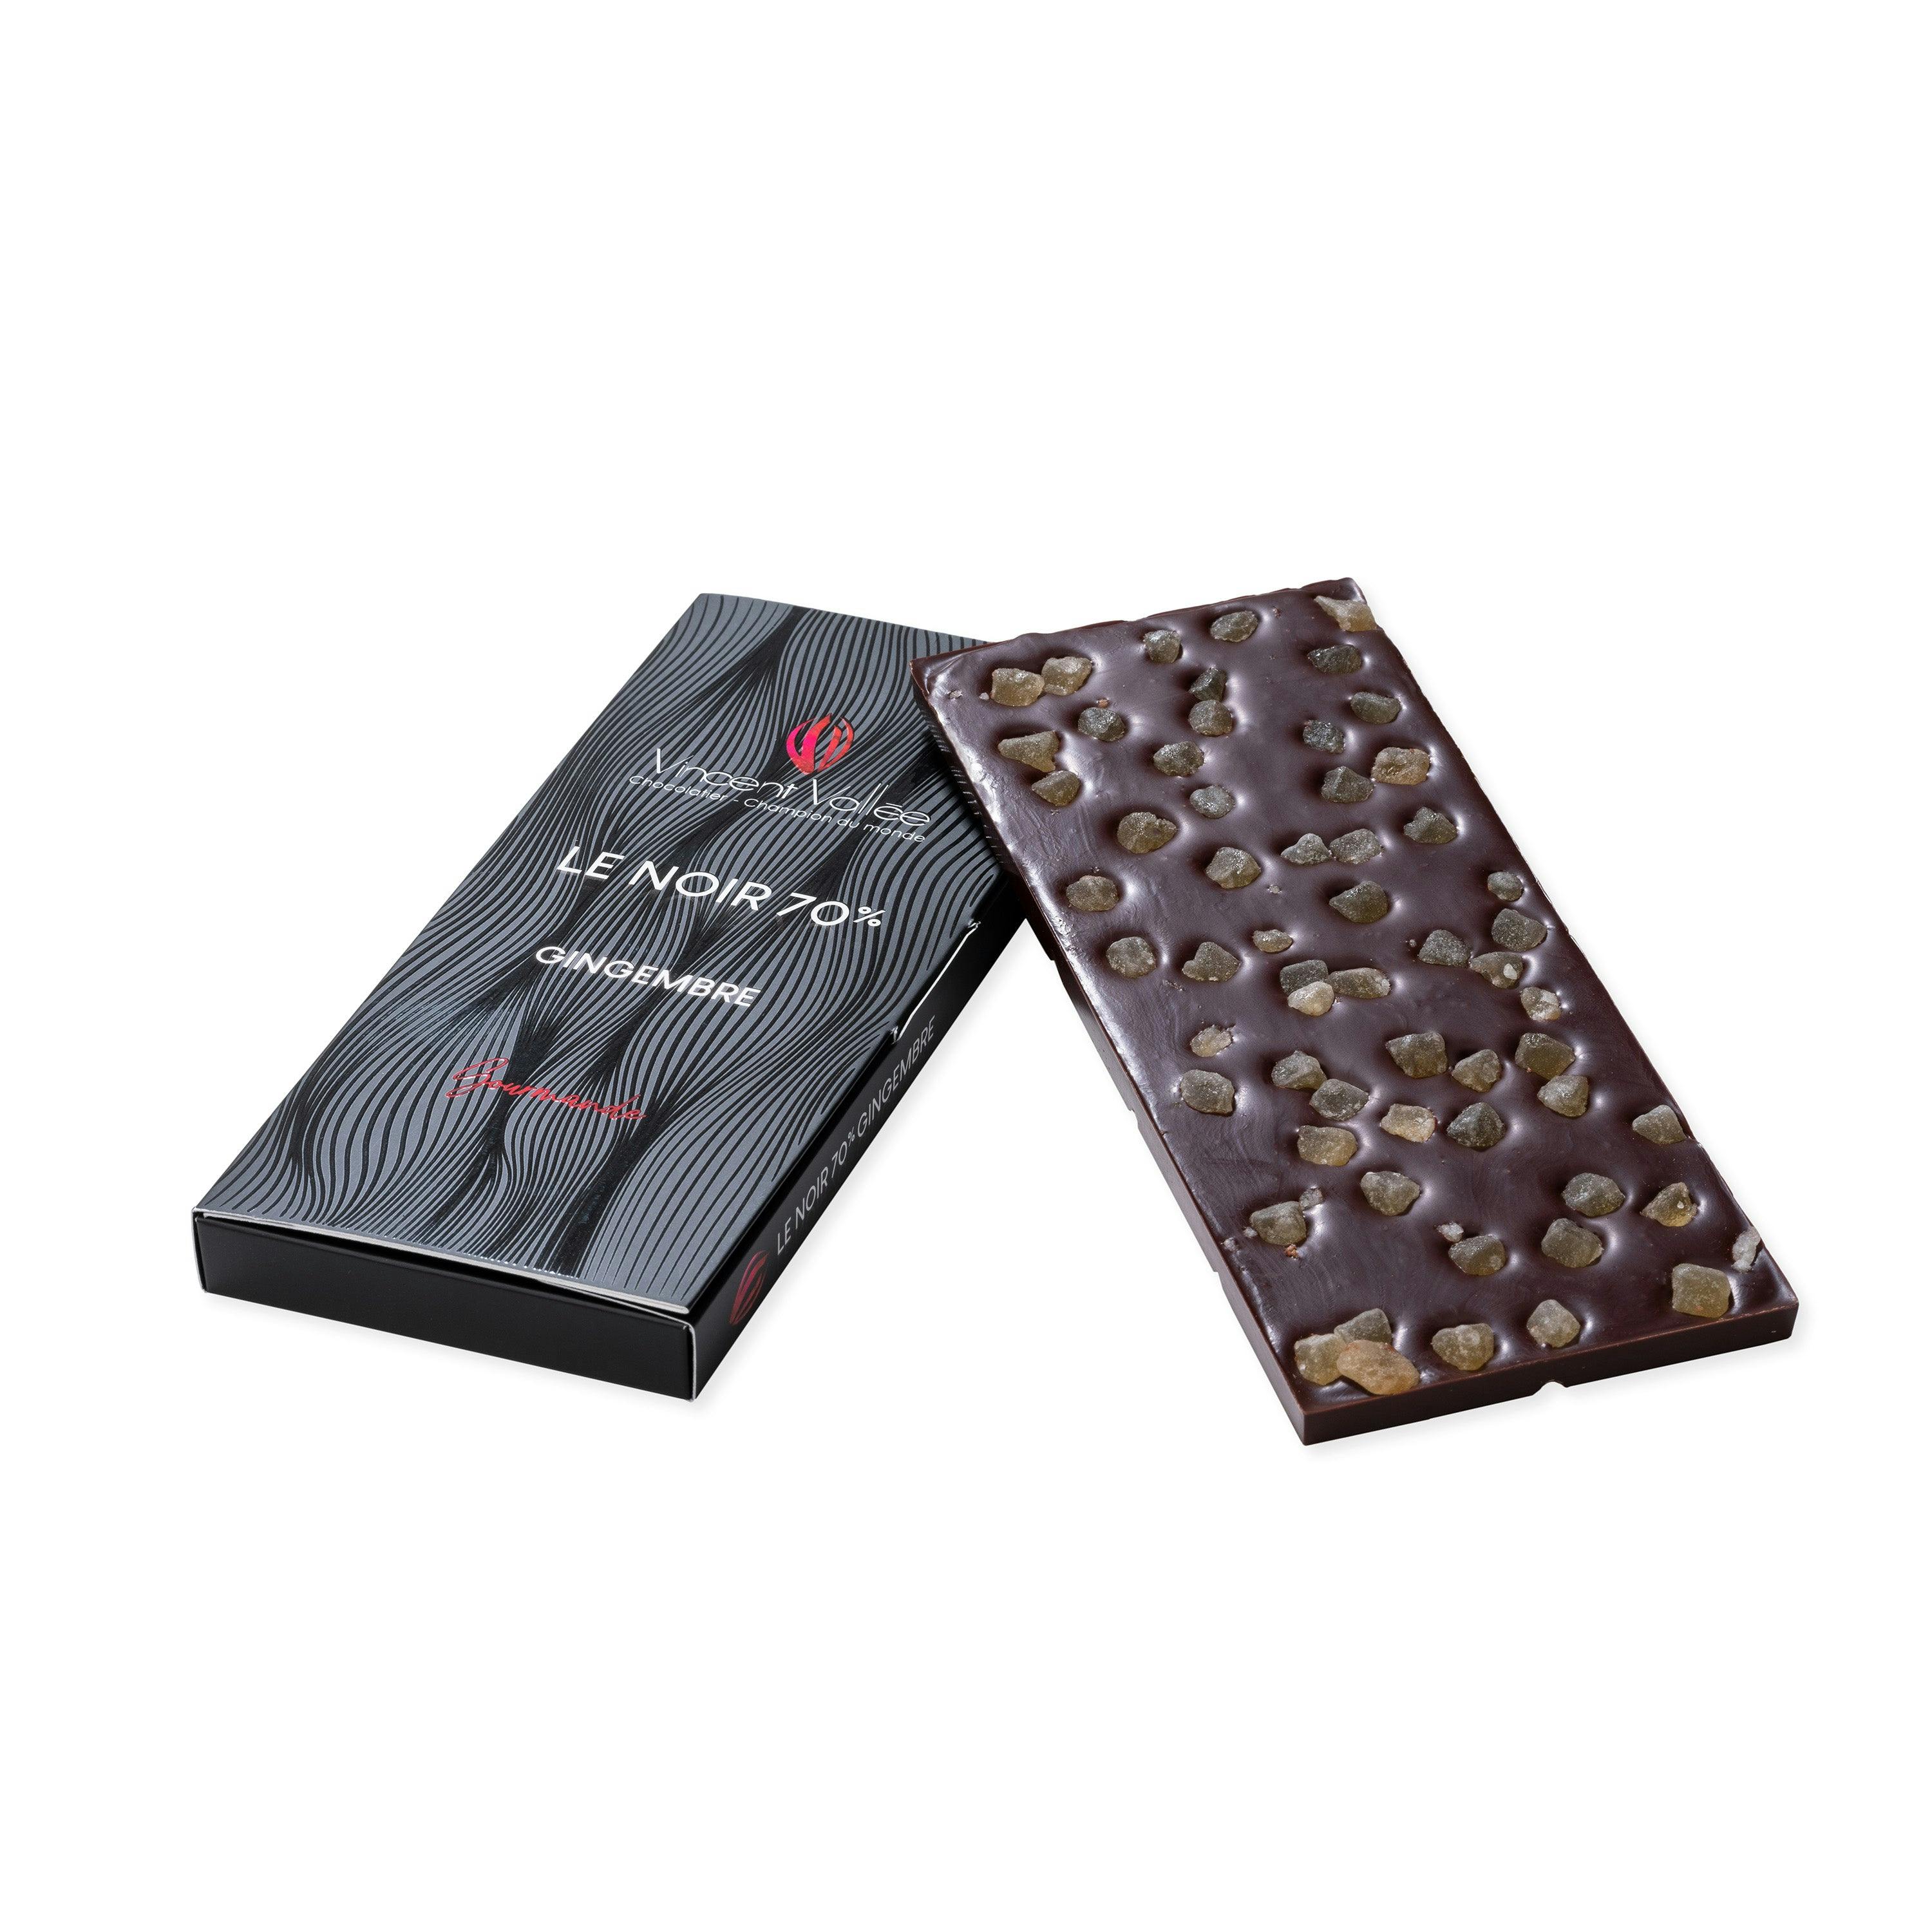 Noir Gingembre - Vincent Vallée world champion chocolatier